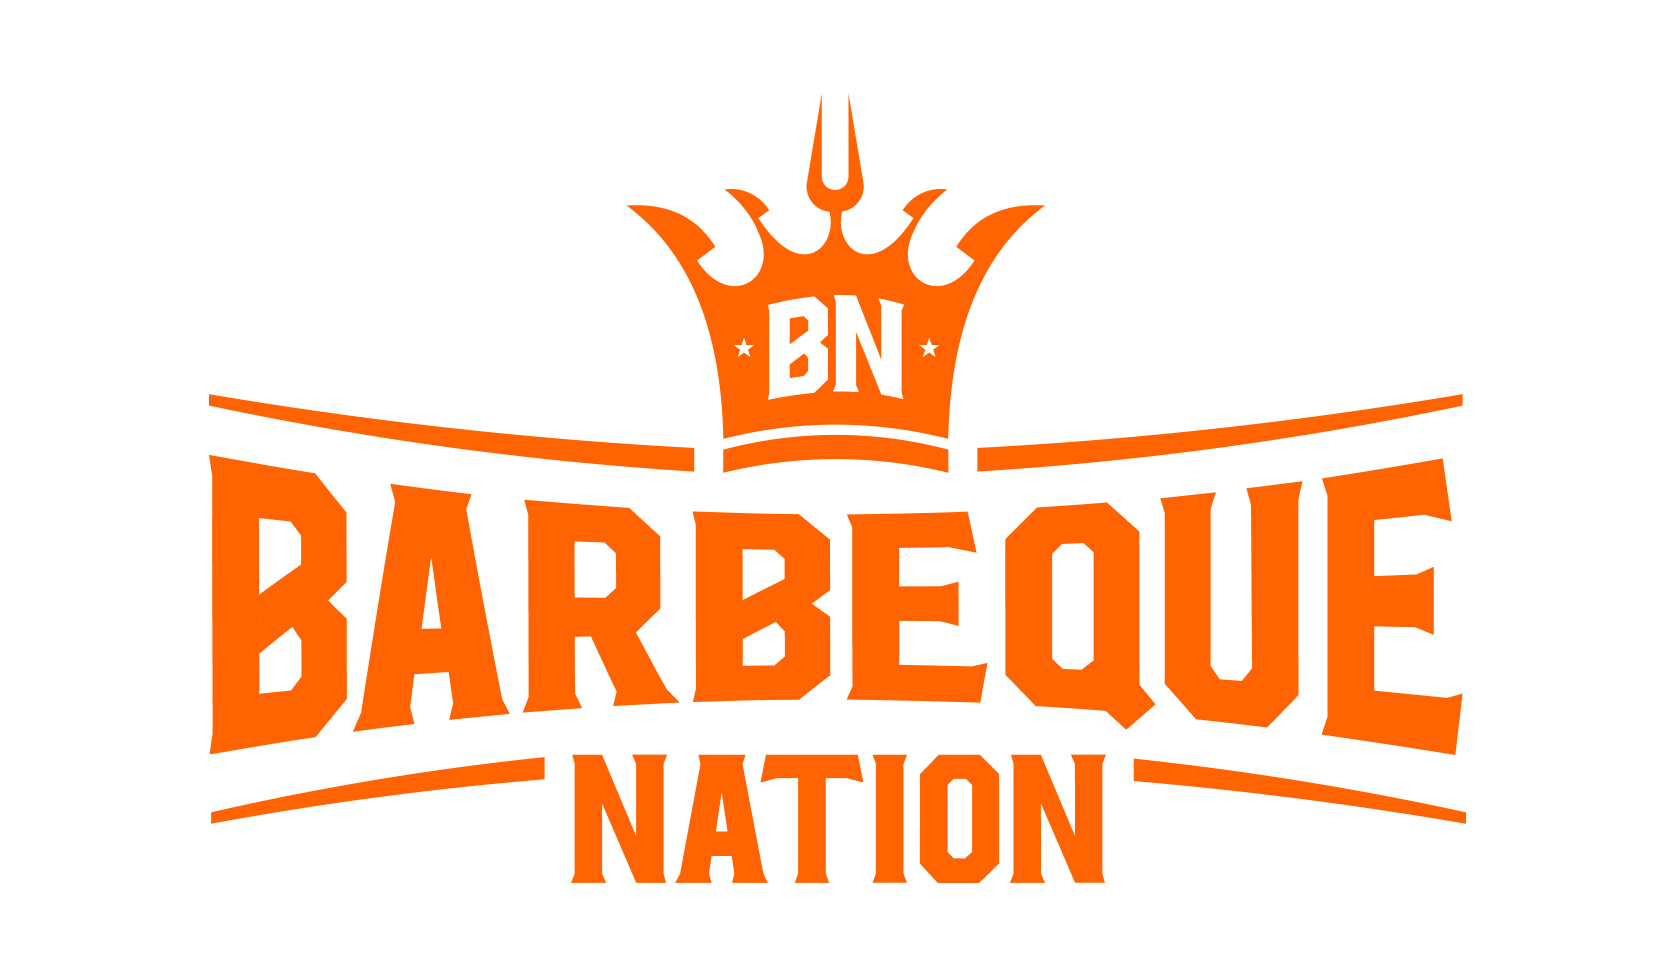 Barbeque Nation for Food Fest Delight